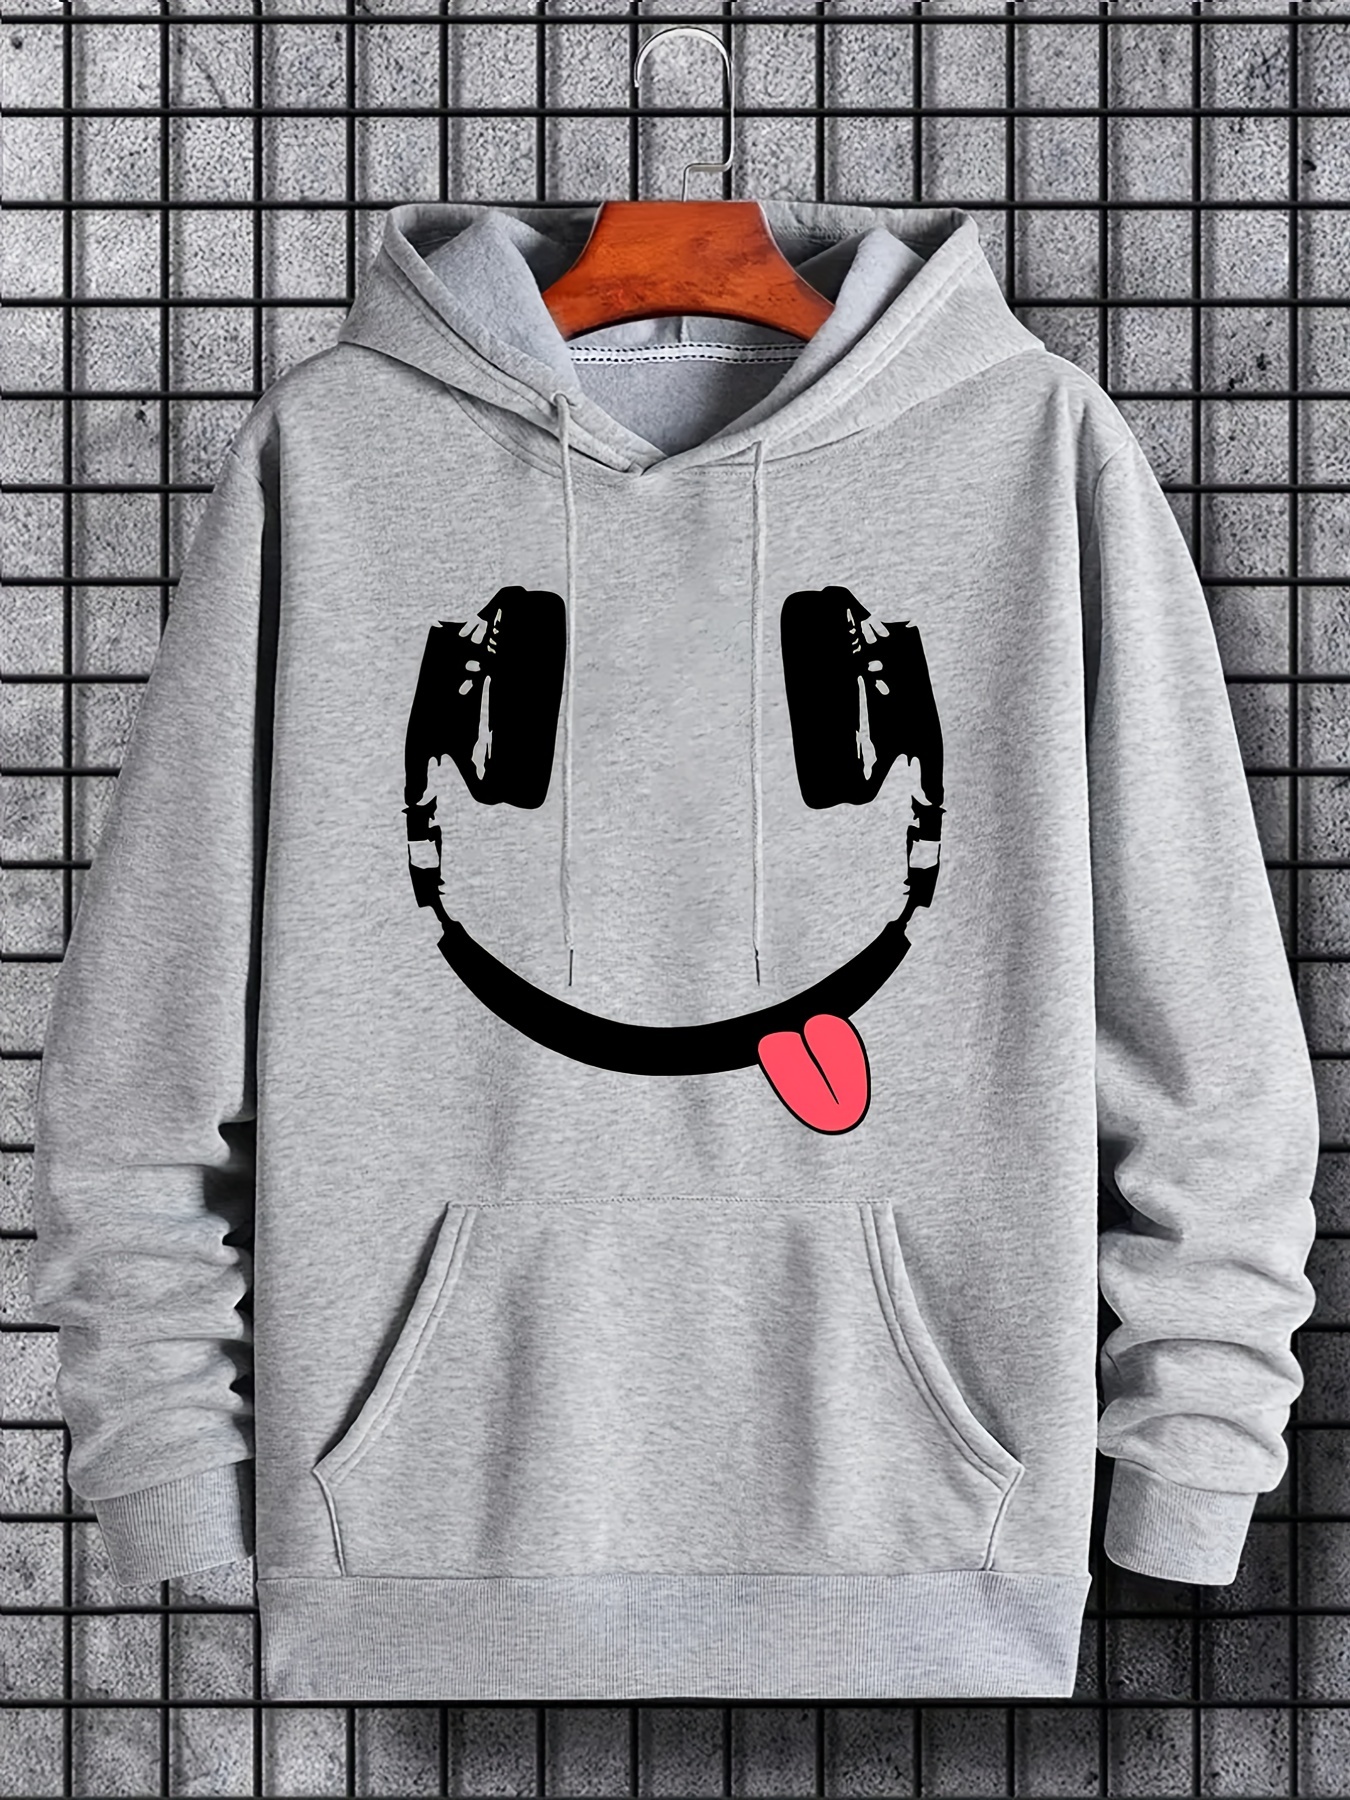 Headphone Smile Print Hoodie, Hoodies For Men, Men’s Casual Graphic Design Pullover Hooded Sweatshirt With Kangaroo Pocket Streetwear For Winter Fall, As Gifts